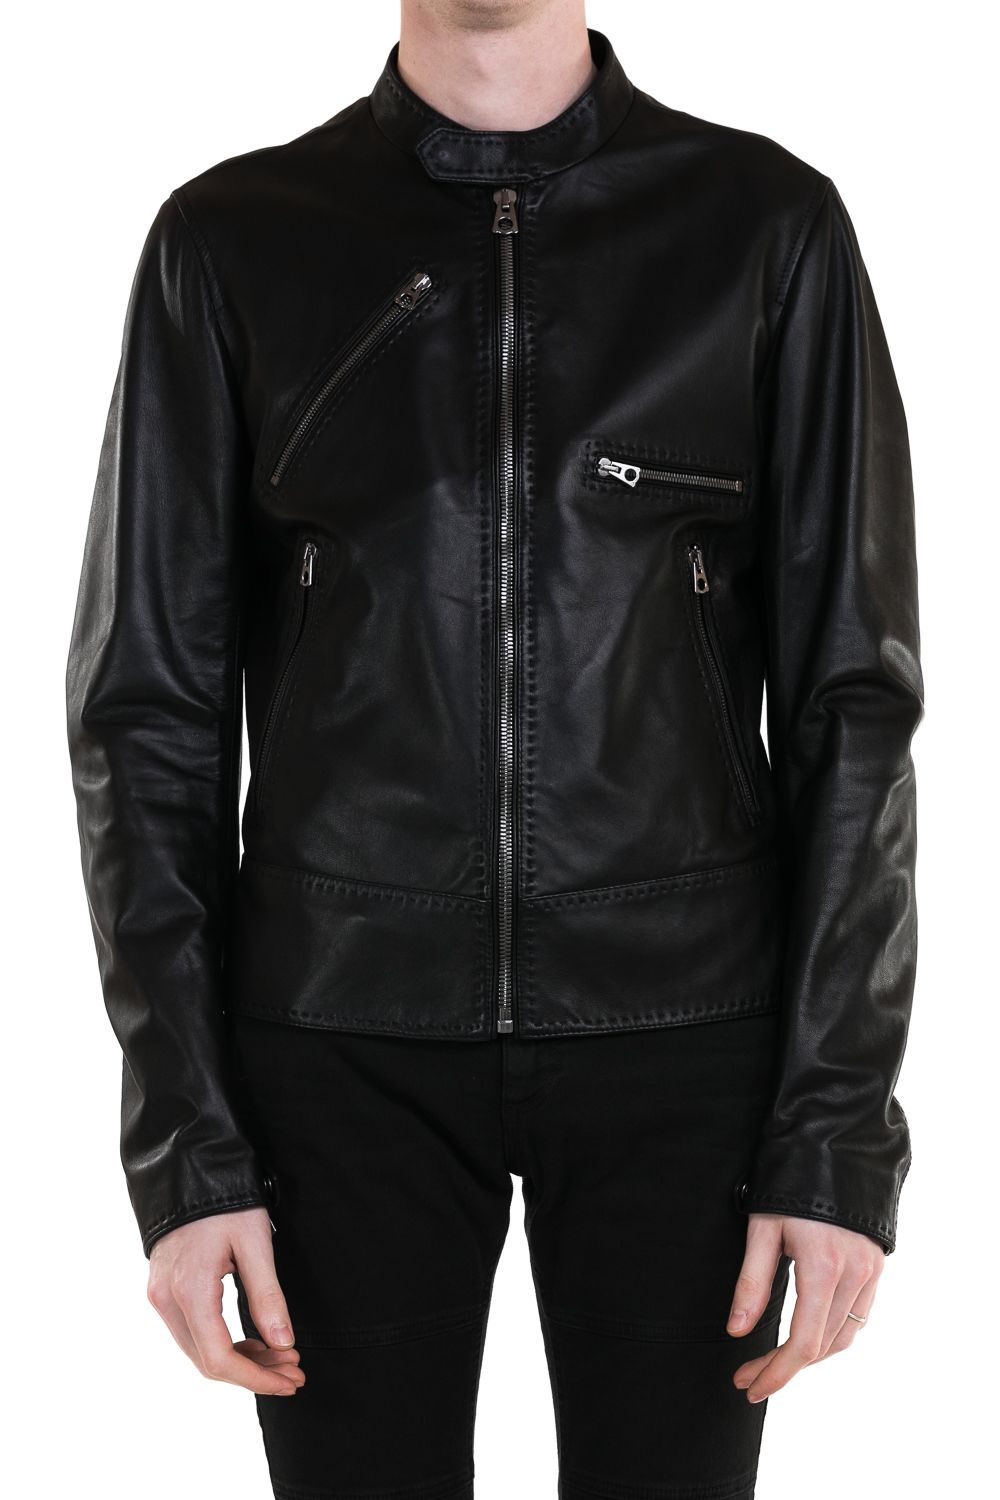 Dolce & Gabbana - Dolce & Gabbana Zipped Leather Jacket - BLACK, Men's